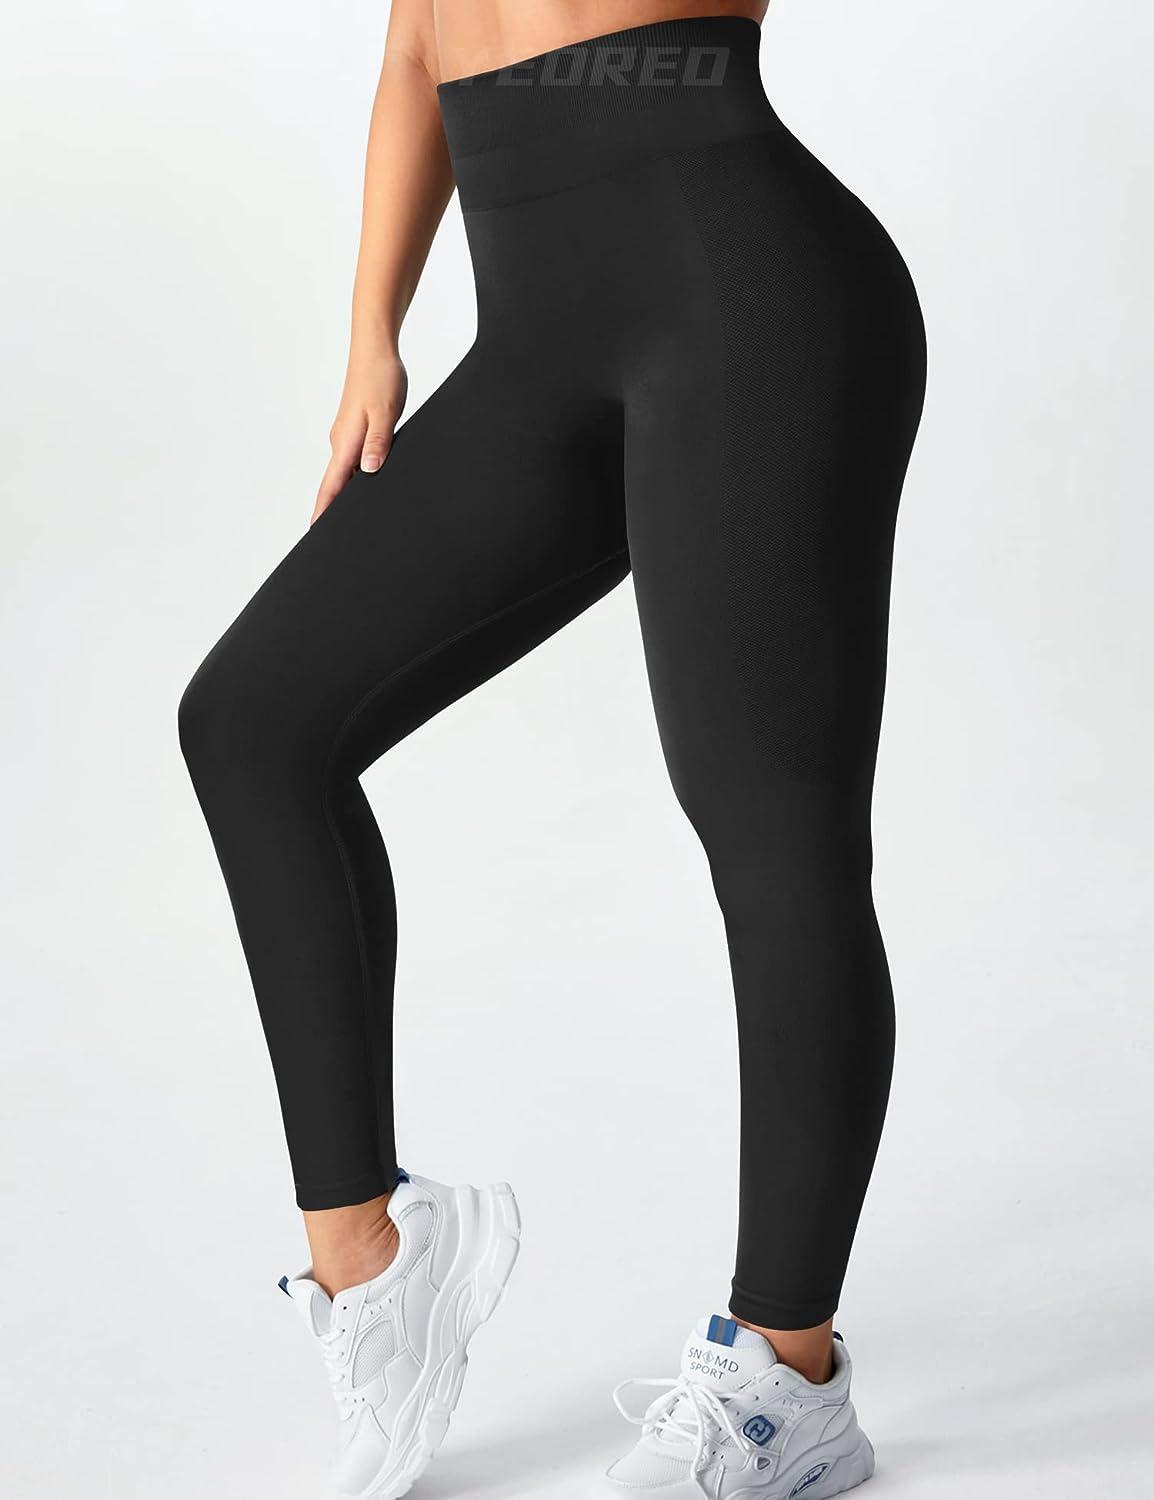 YEOREO Amplify Women's Seamless Scrunch Legging Workout Leggings for Women Butt  Lift Tights Gym High Waist Yoga Pant #0 Black Marl Small